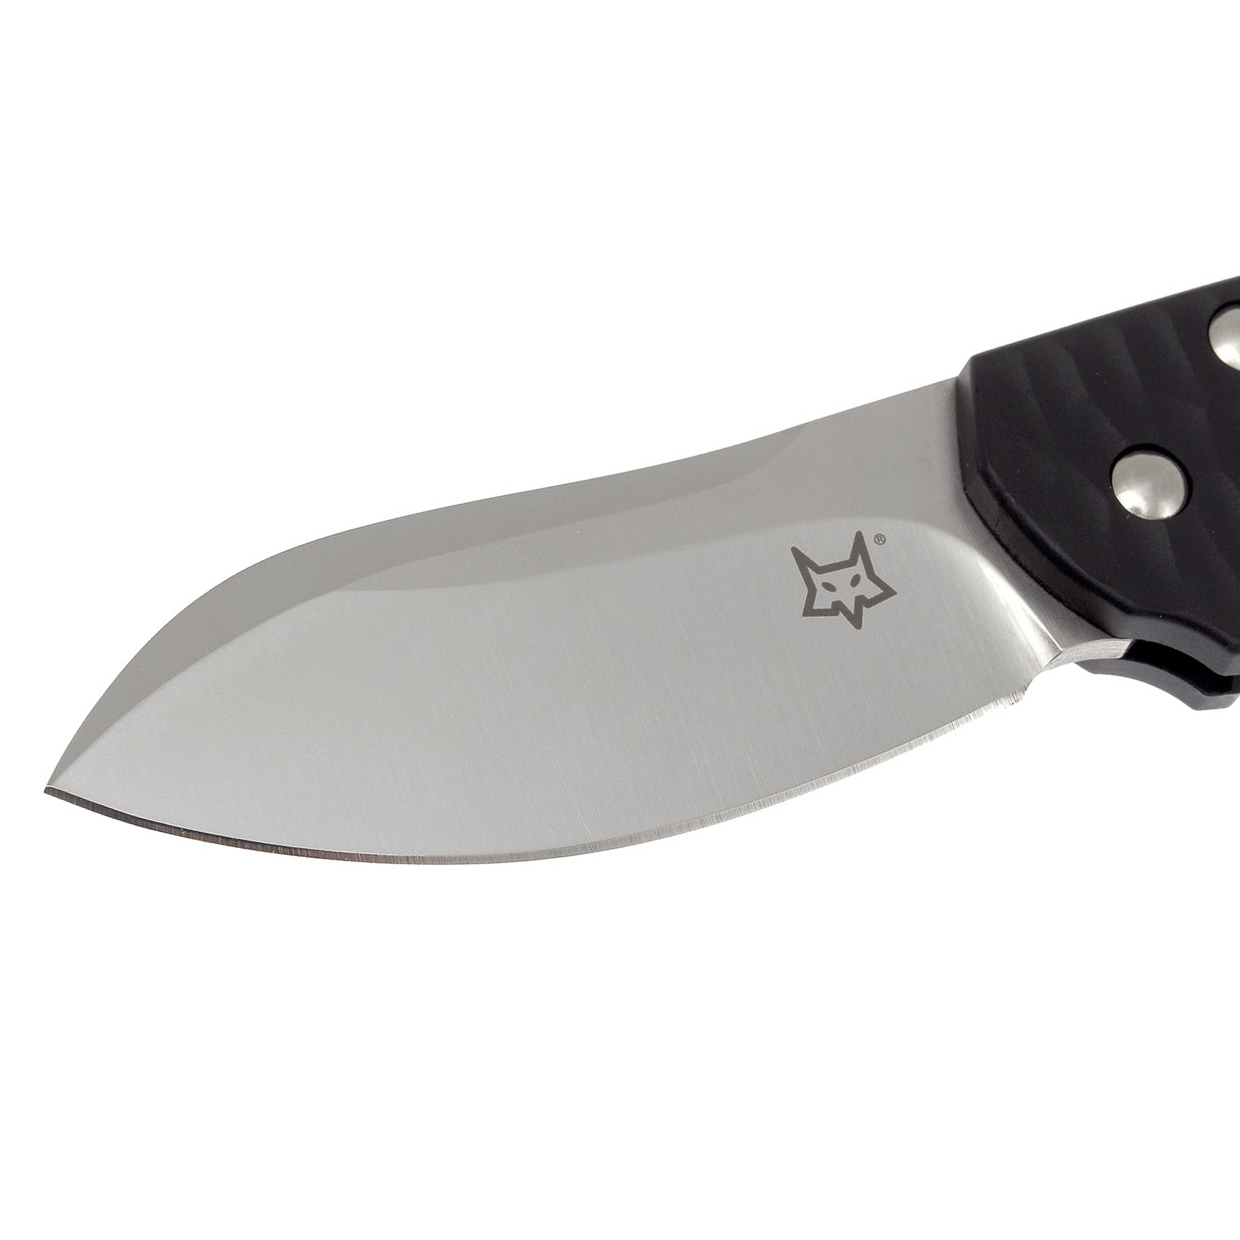 Складной нож Fox Jens Anso Design, сталь N690, рукоять термопластик FRN, черный - фото 4